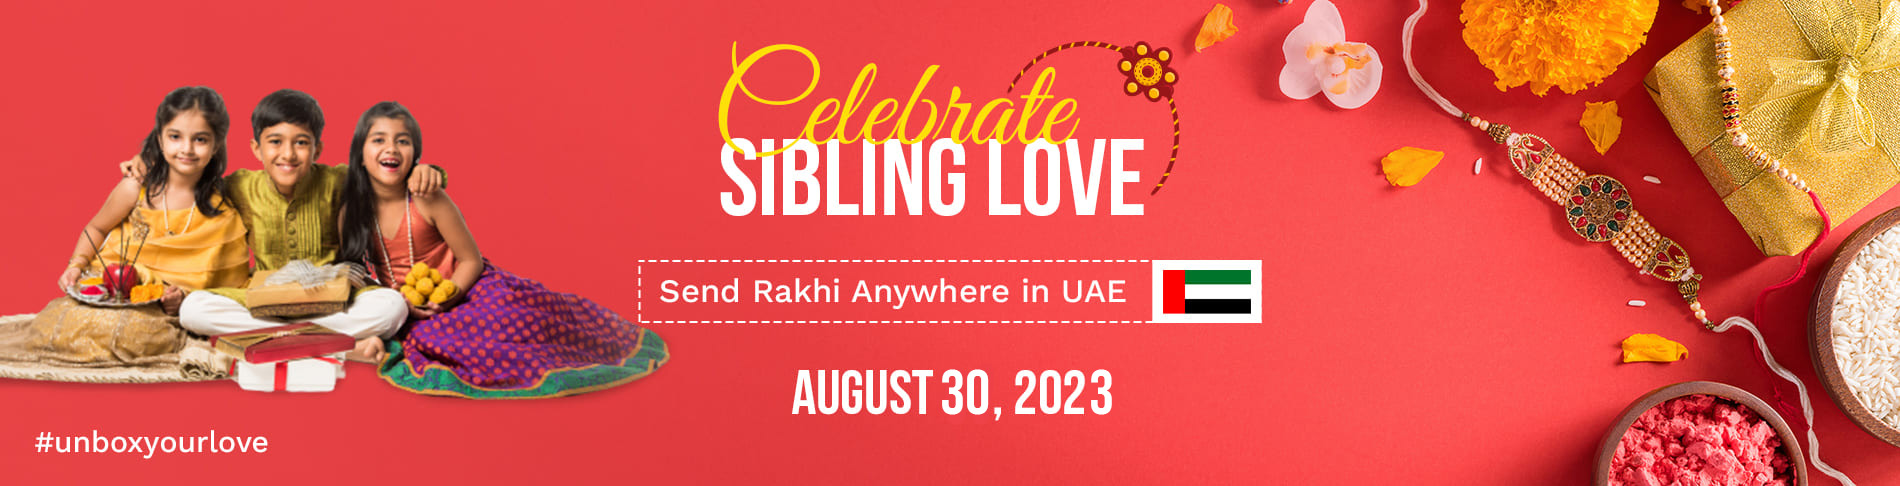 Send Rakhi Gifts 2021 UAE